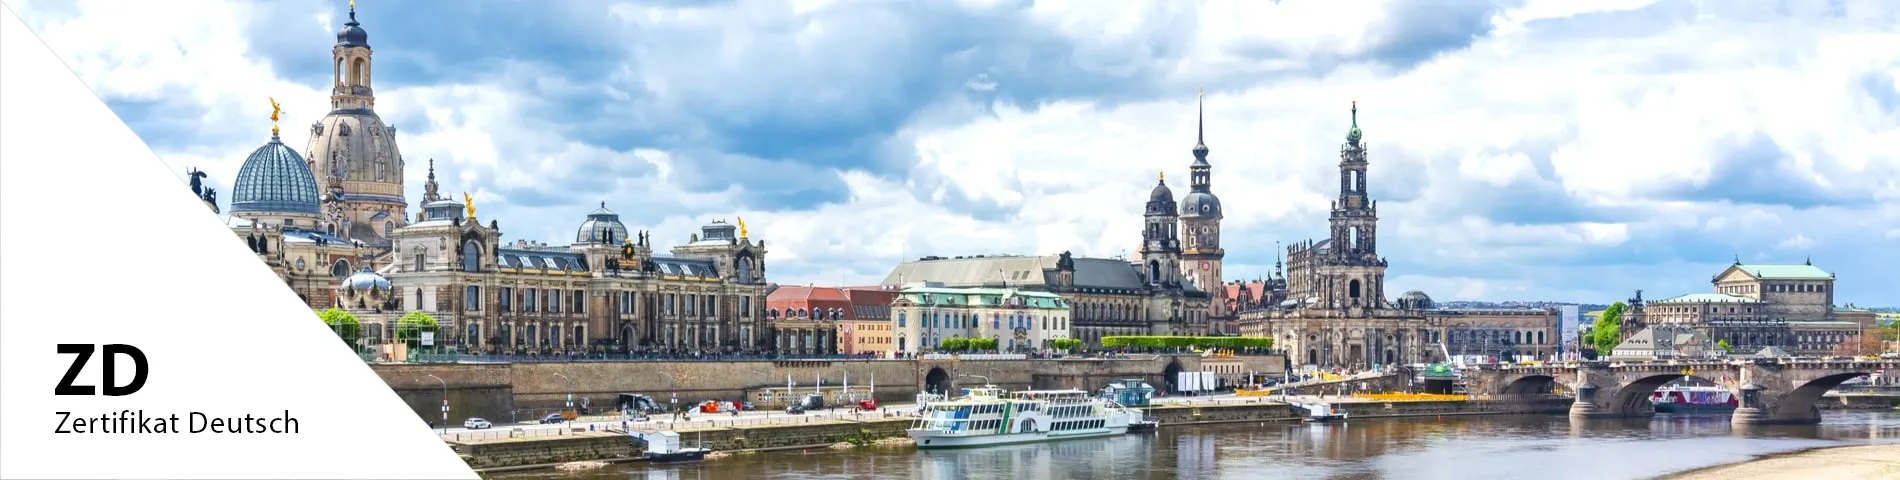 Dresden - Zertifikat Deutsch (ZD)